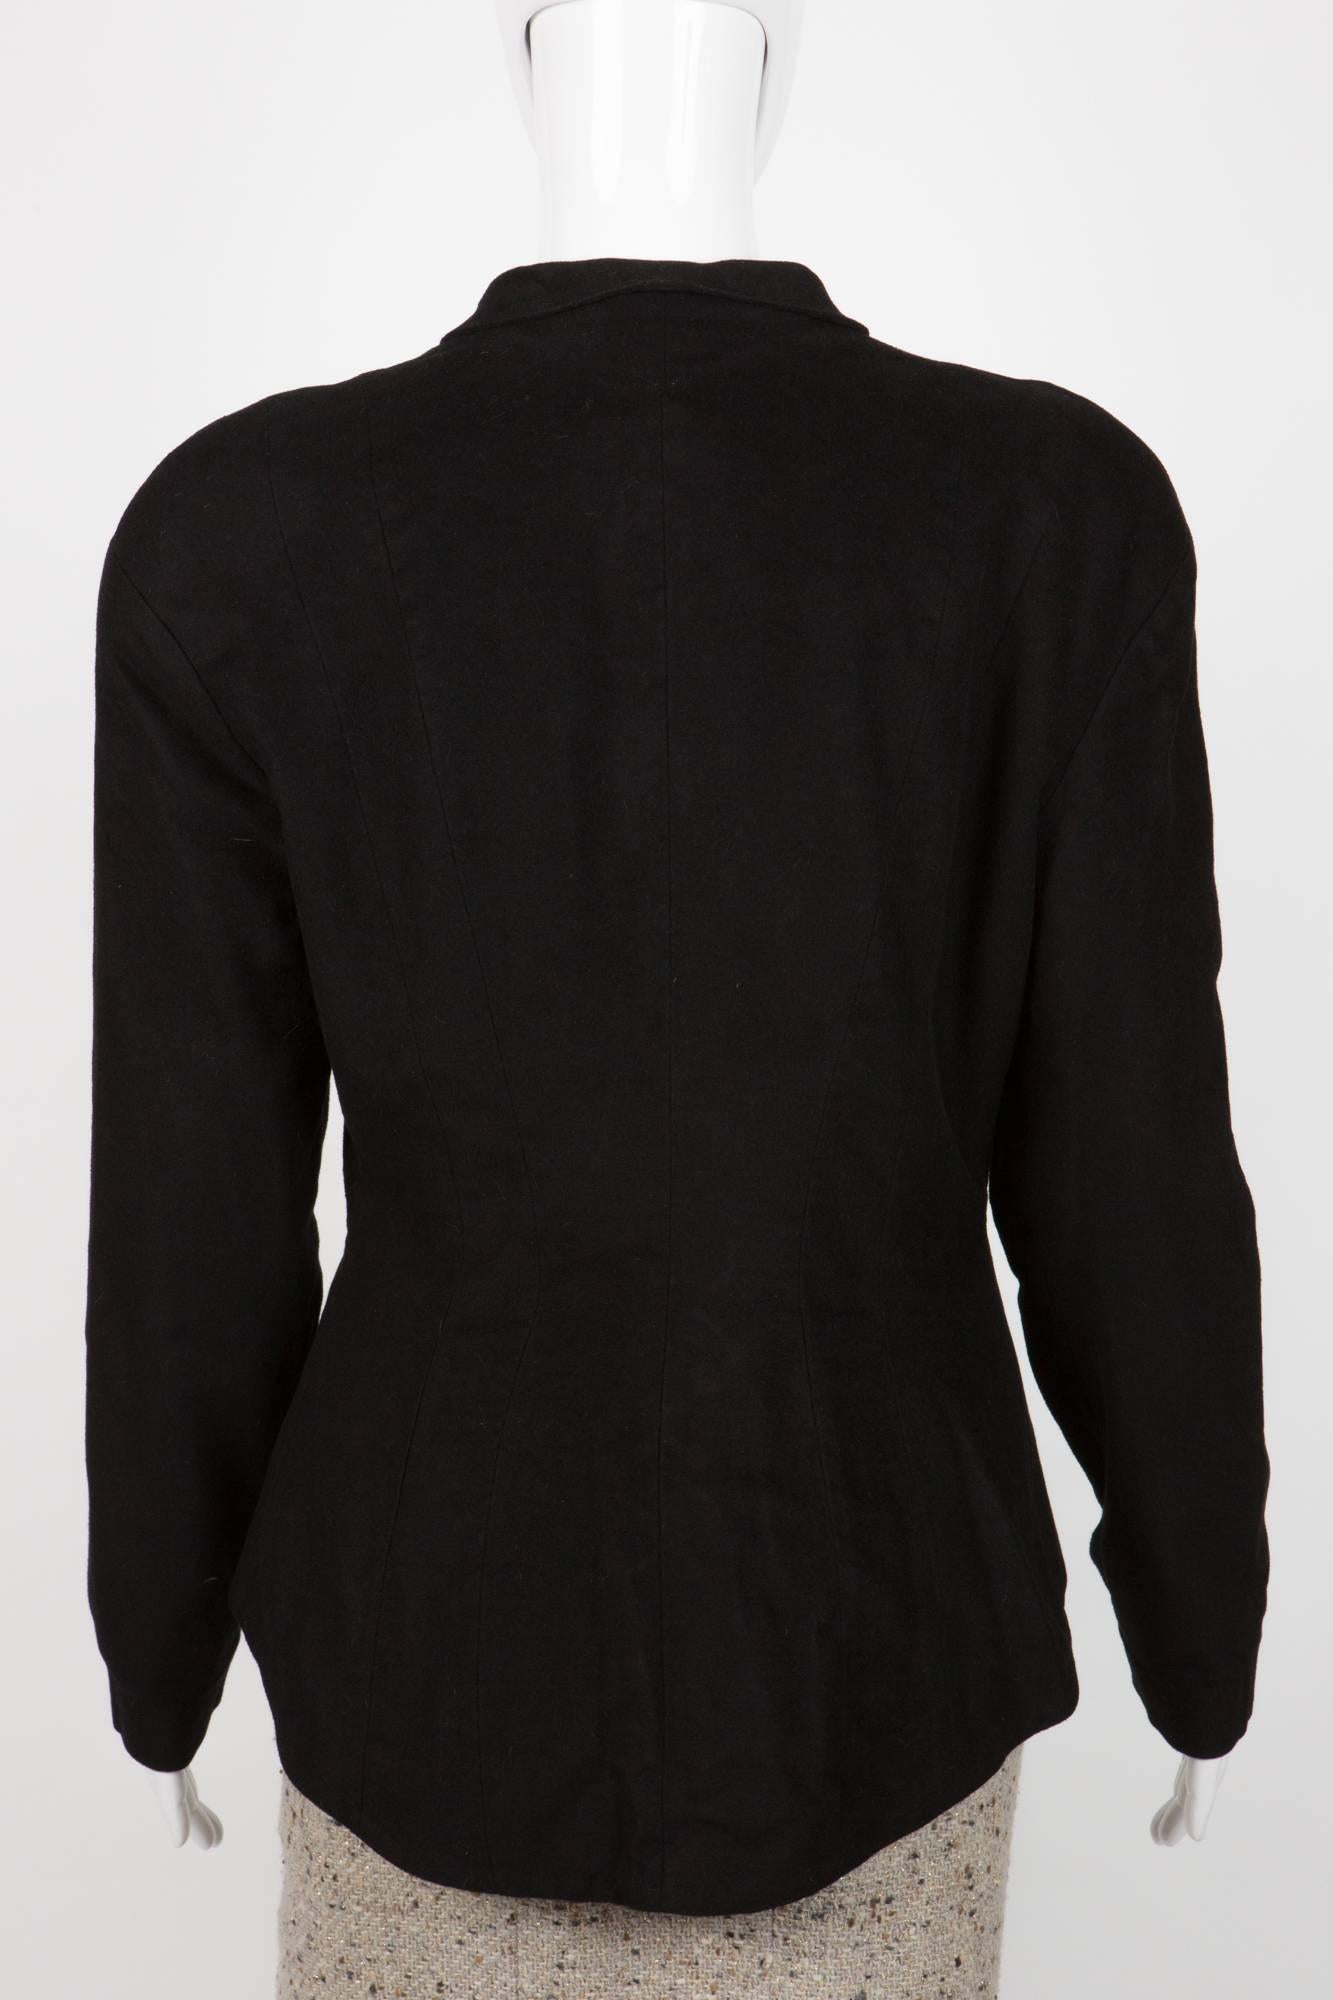 Women's 1980s Thierry Mugler Black Iconic Jacket